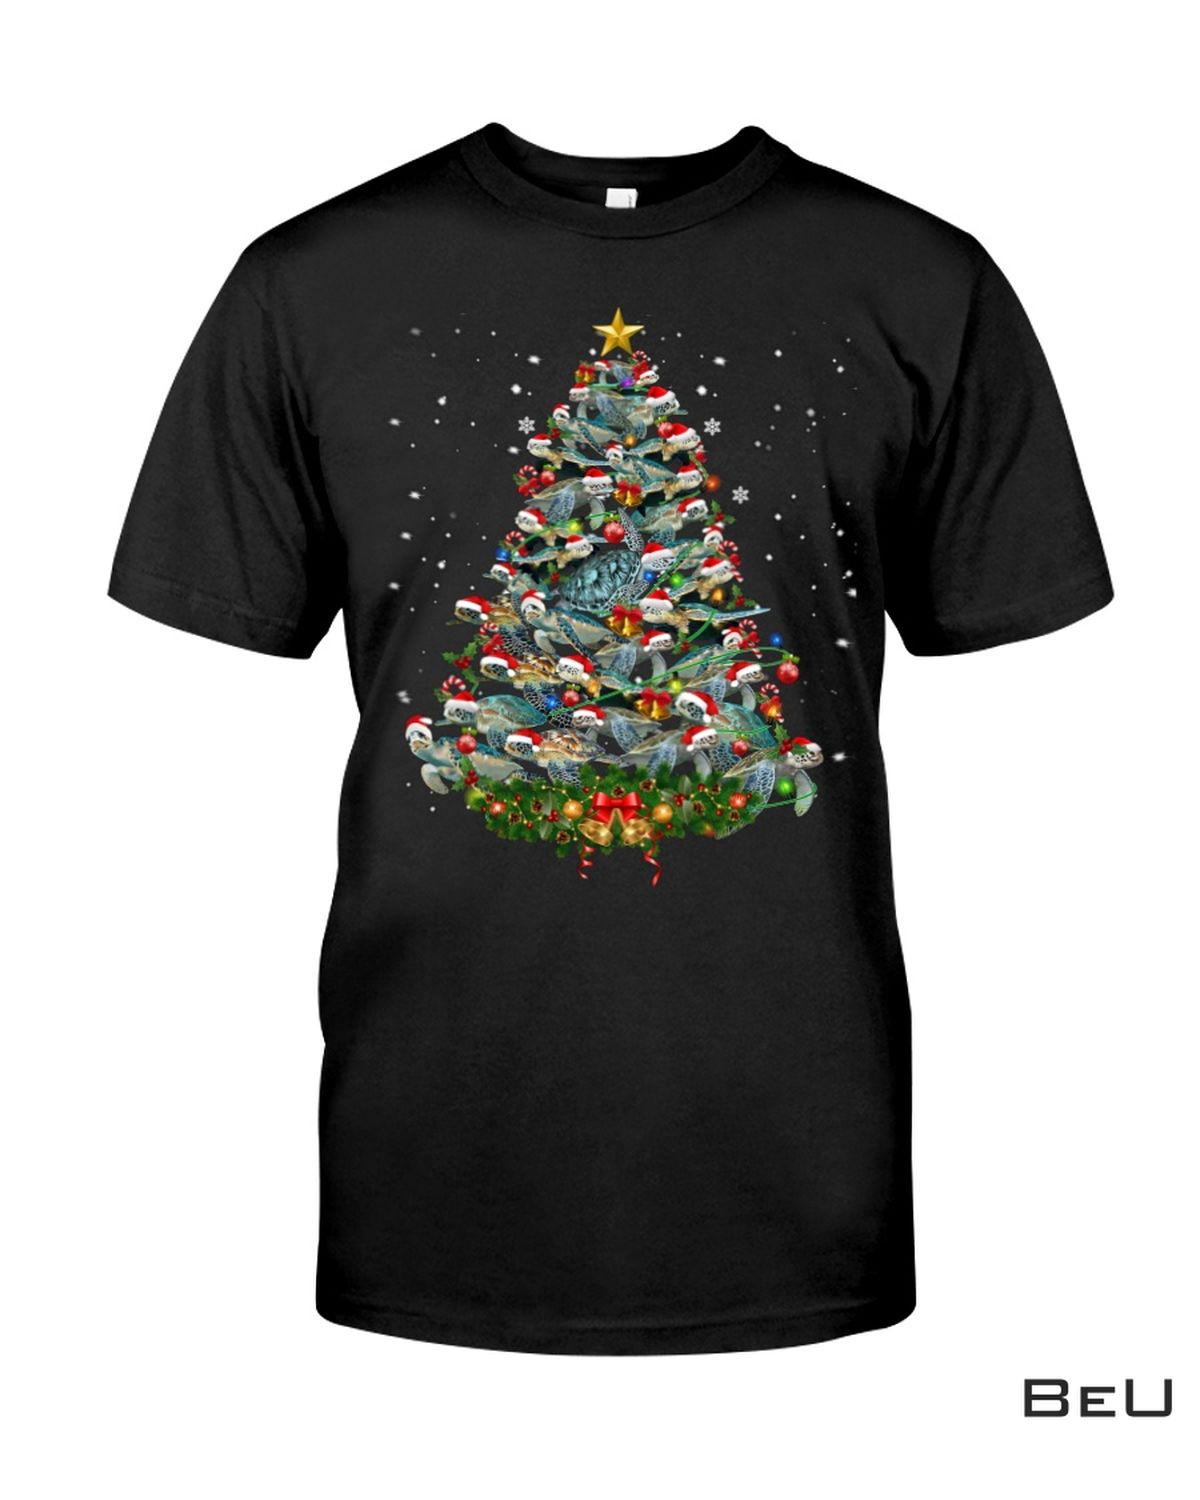 Turtle Christmas Tree Shirt